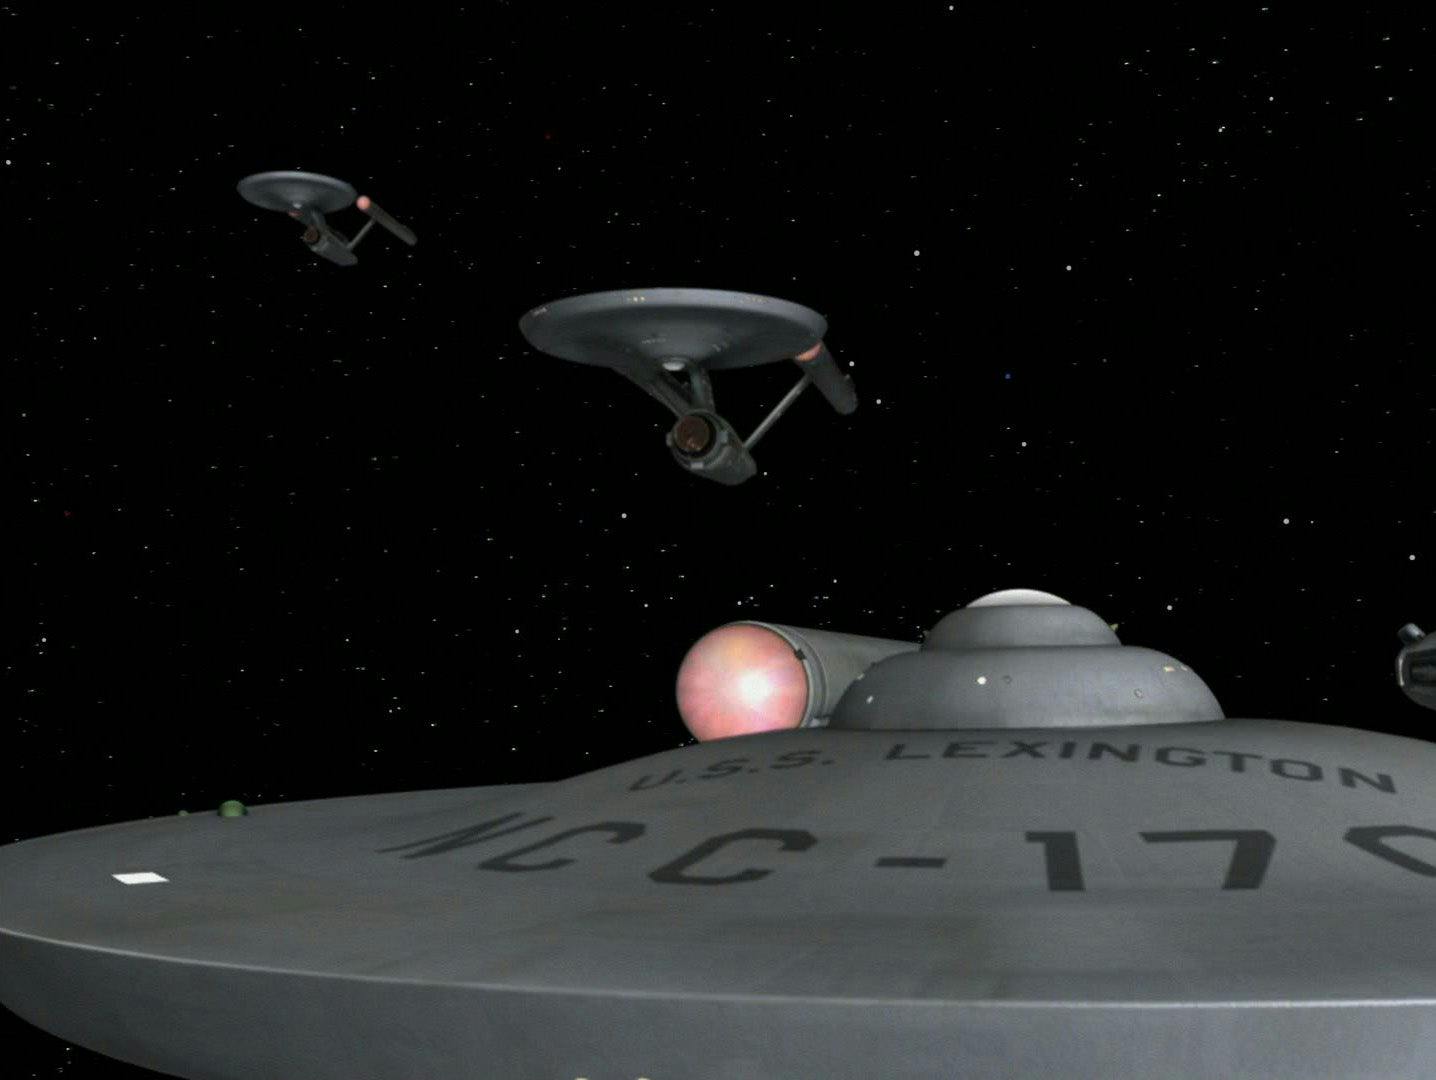 Fleet of Starfleet starships in Star Trek: The Original Series